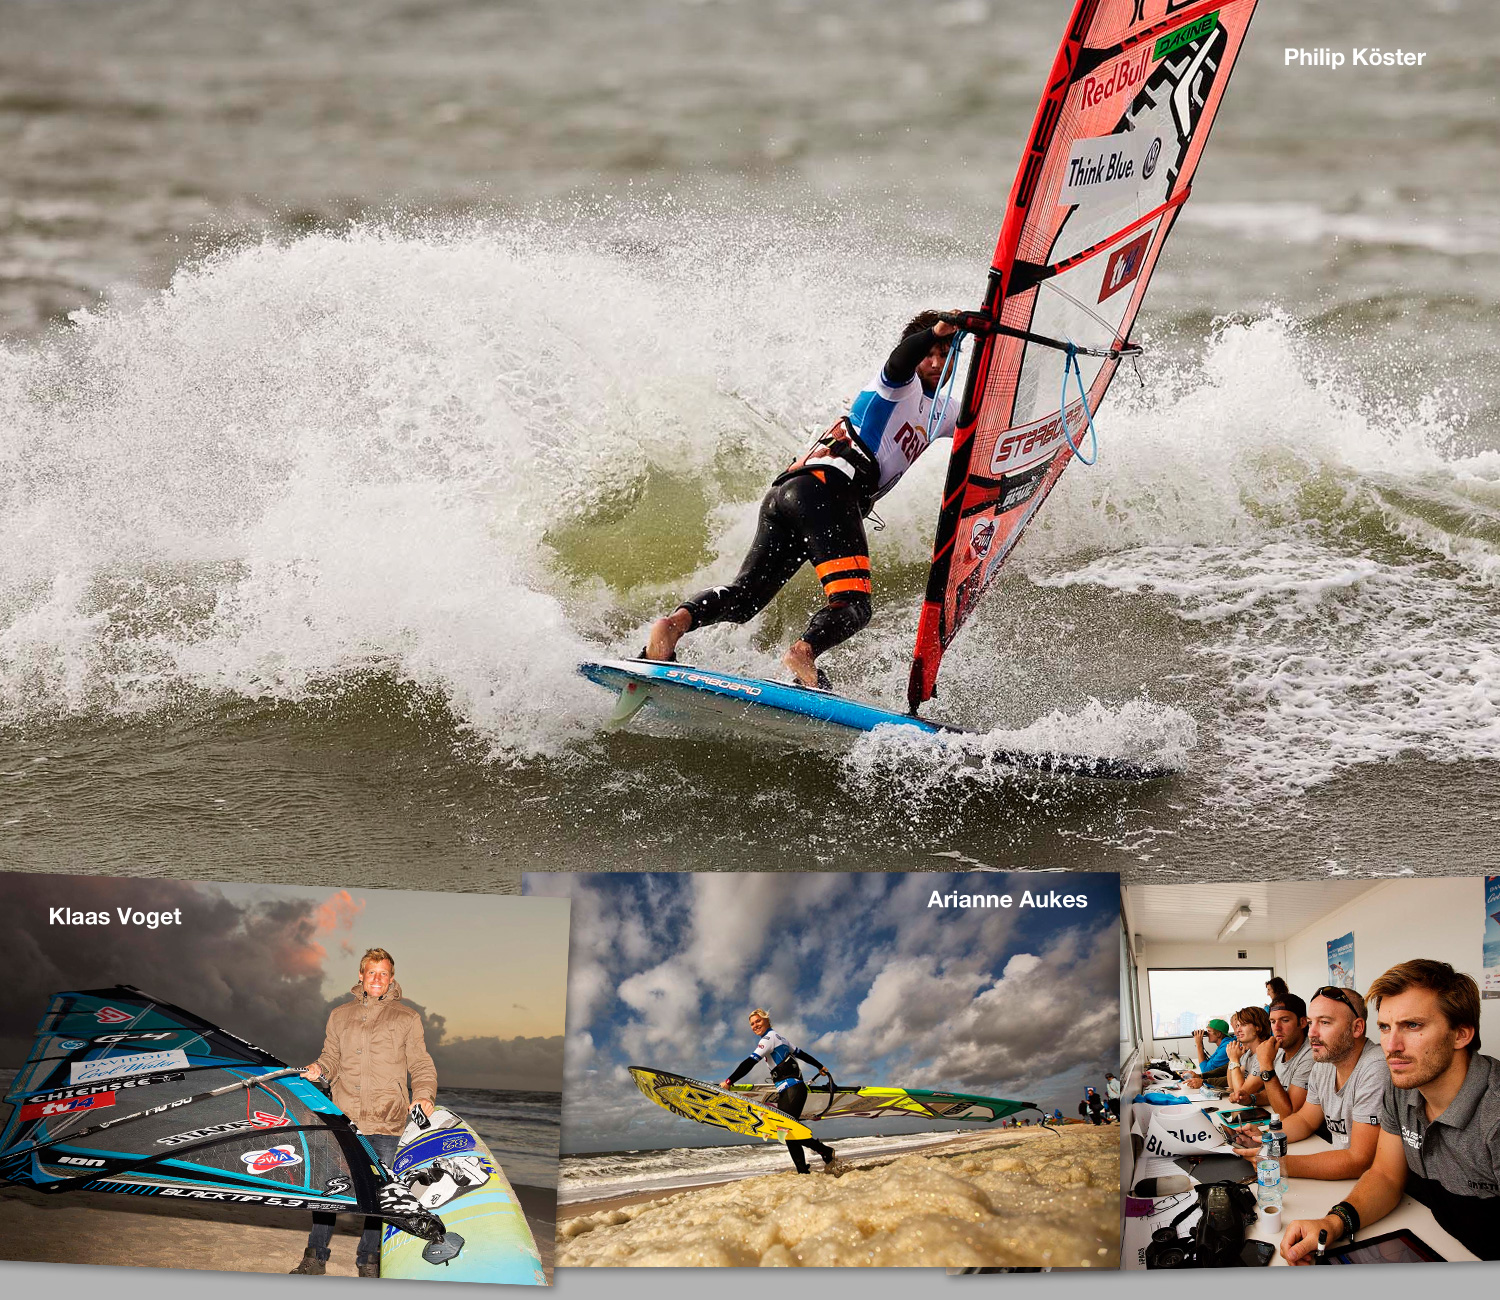 Davidoff Cool Water Windsurf World Cup 2014 - Super Grand Slam